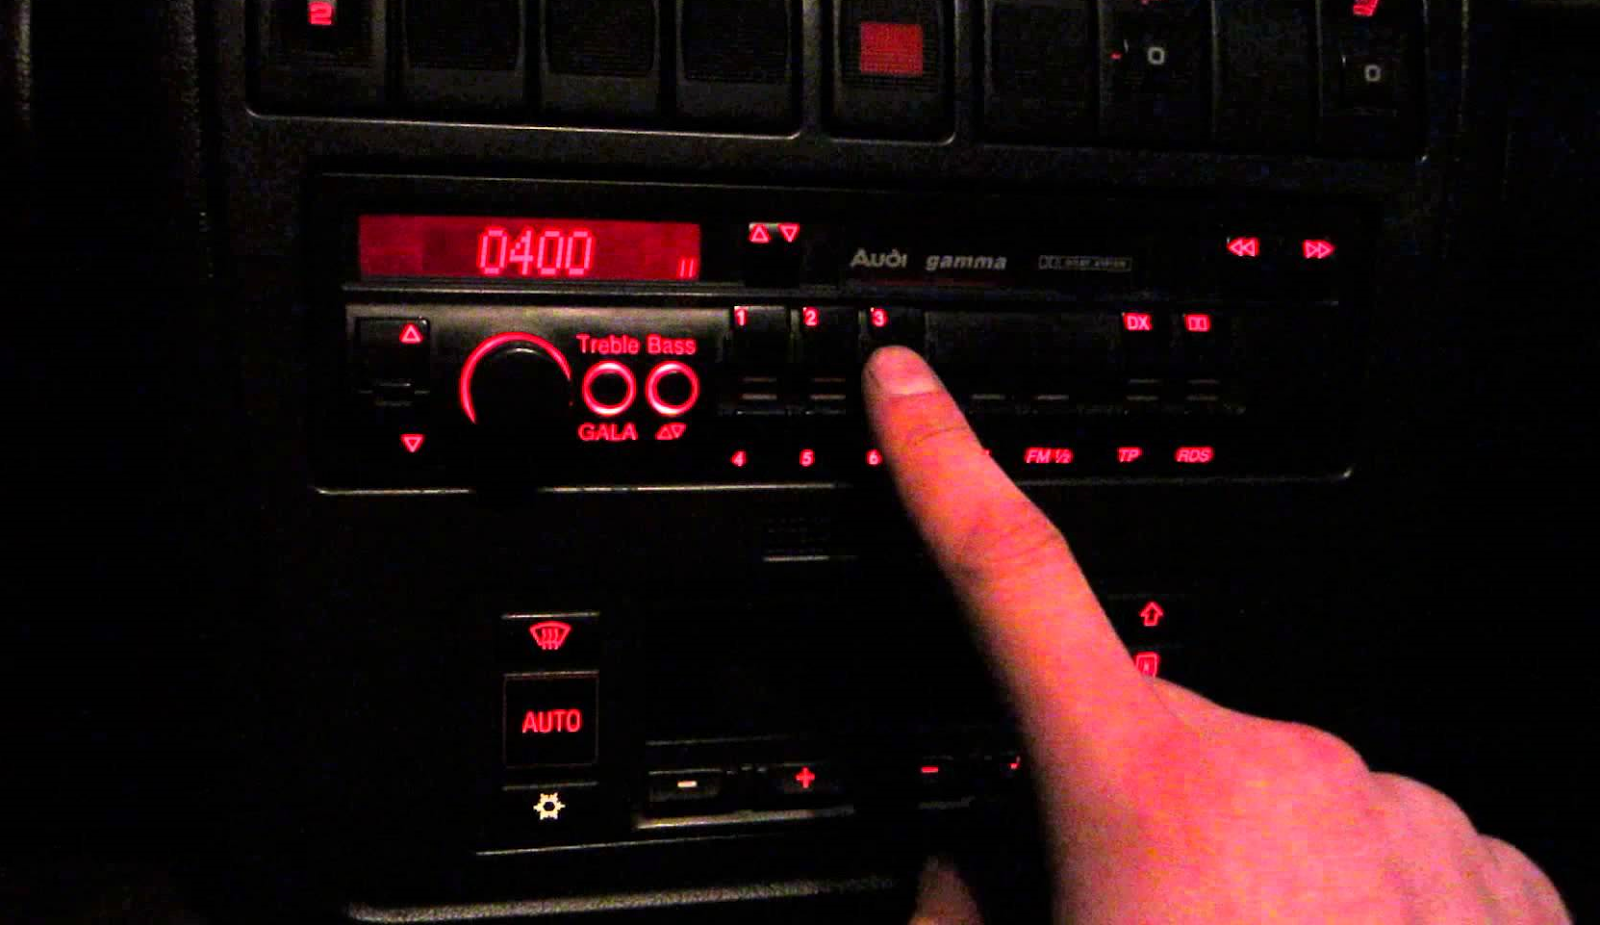 Audi Radio Code Keygen Software